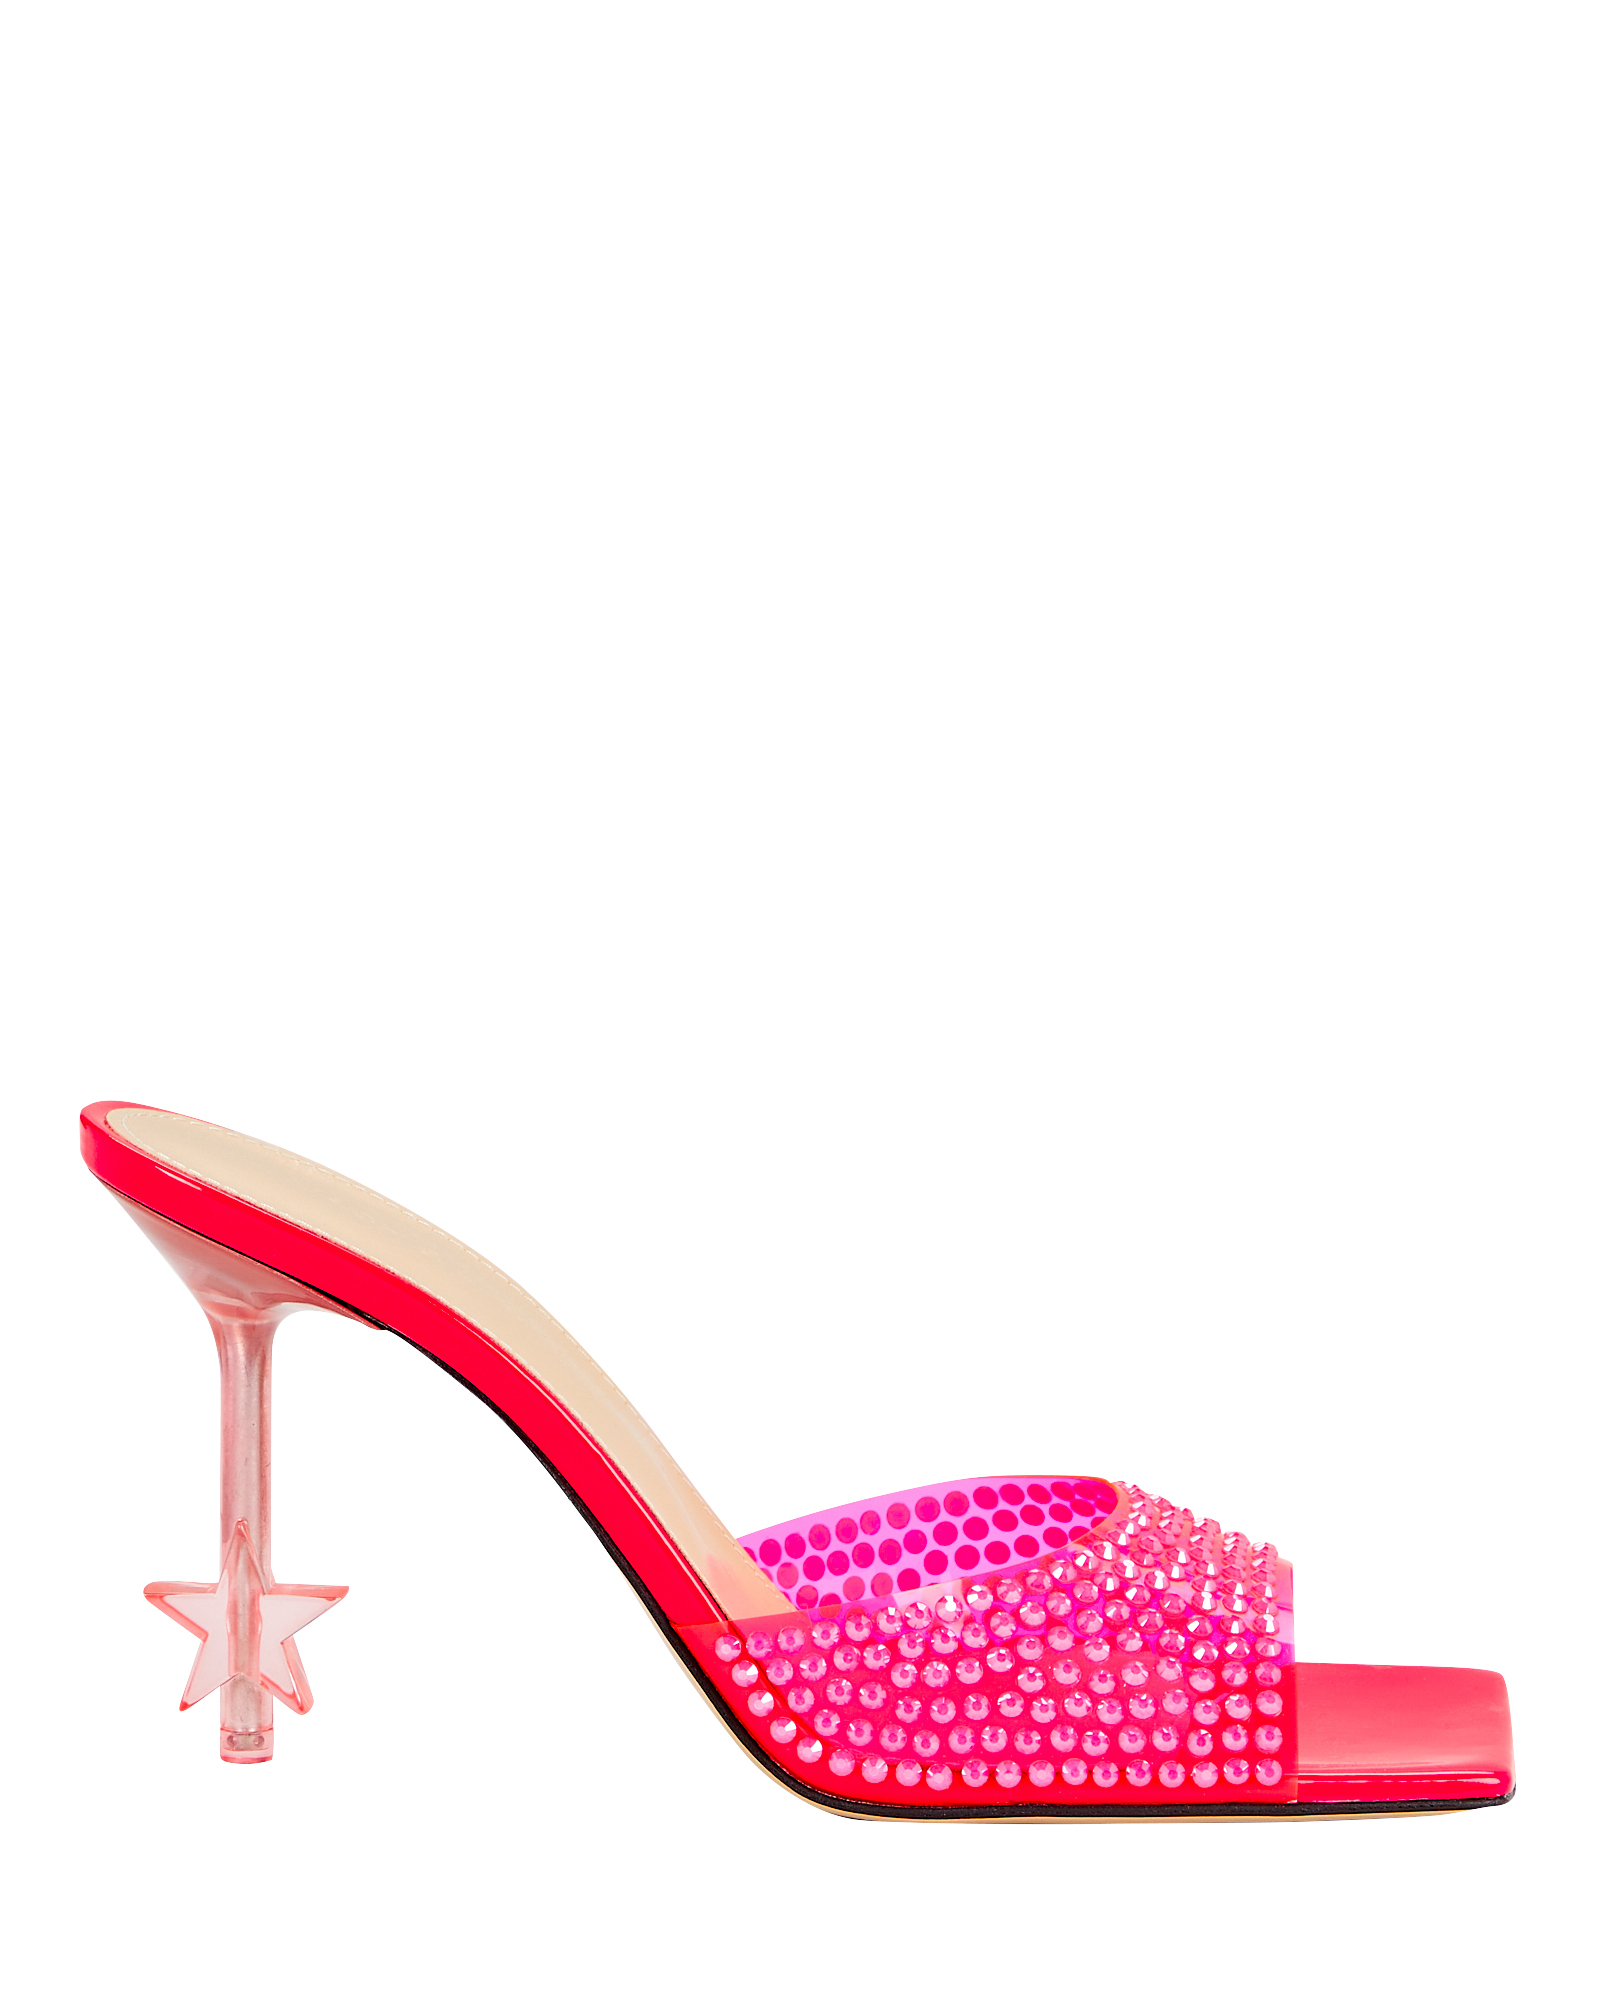 MACH & MACH PVC Star-Heel Mules In Pink | INTERMIX®